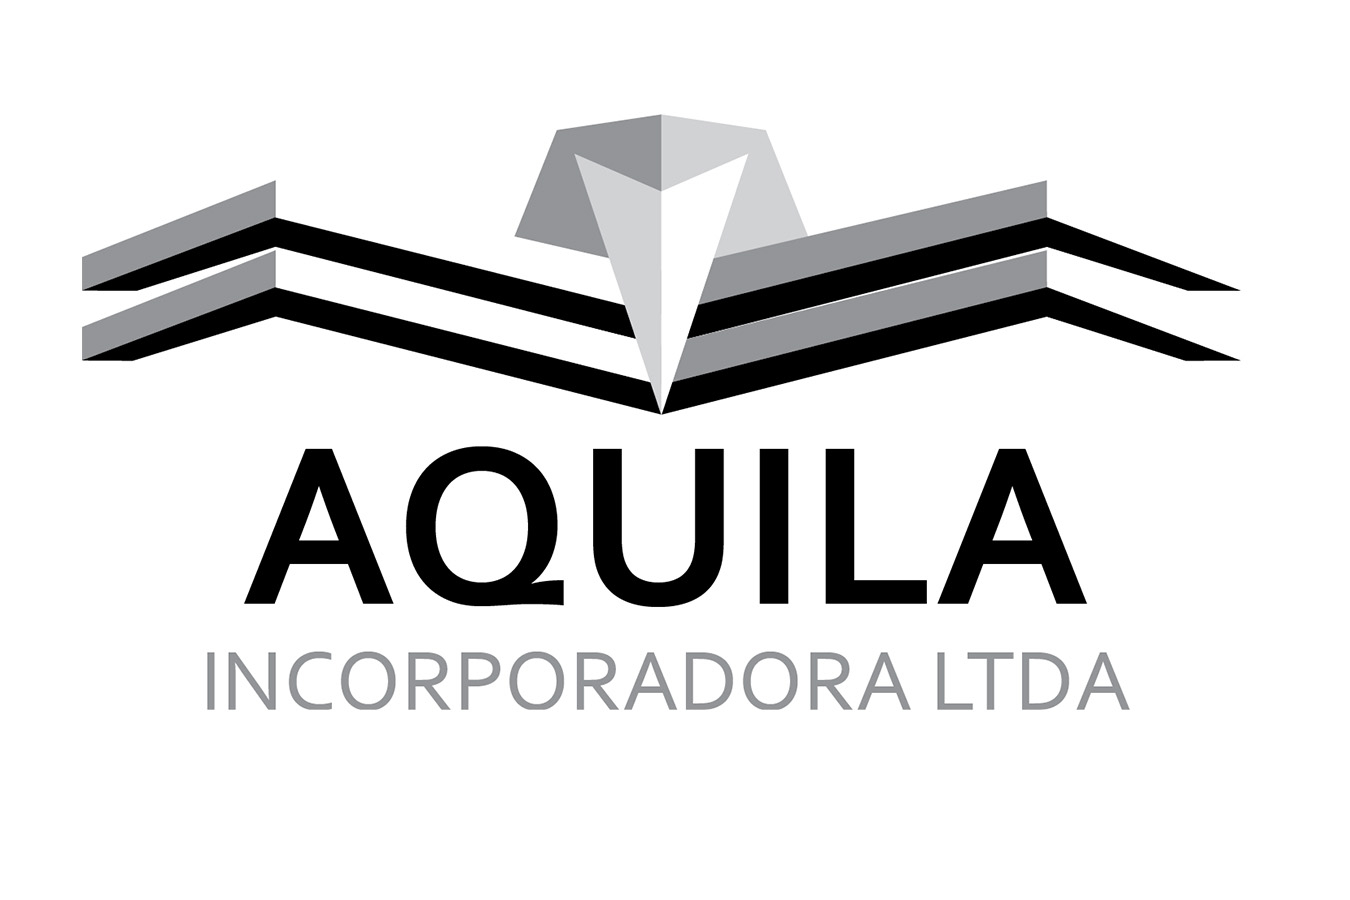 Aquilla 1 : Aquila is a real estate developer in Brazil 